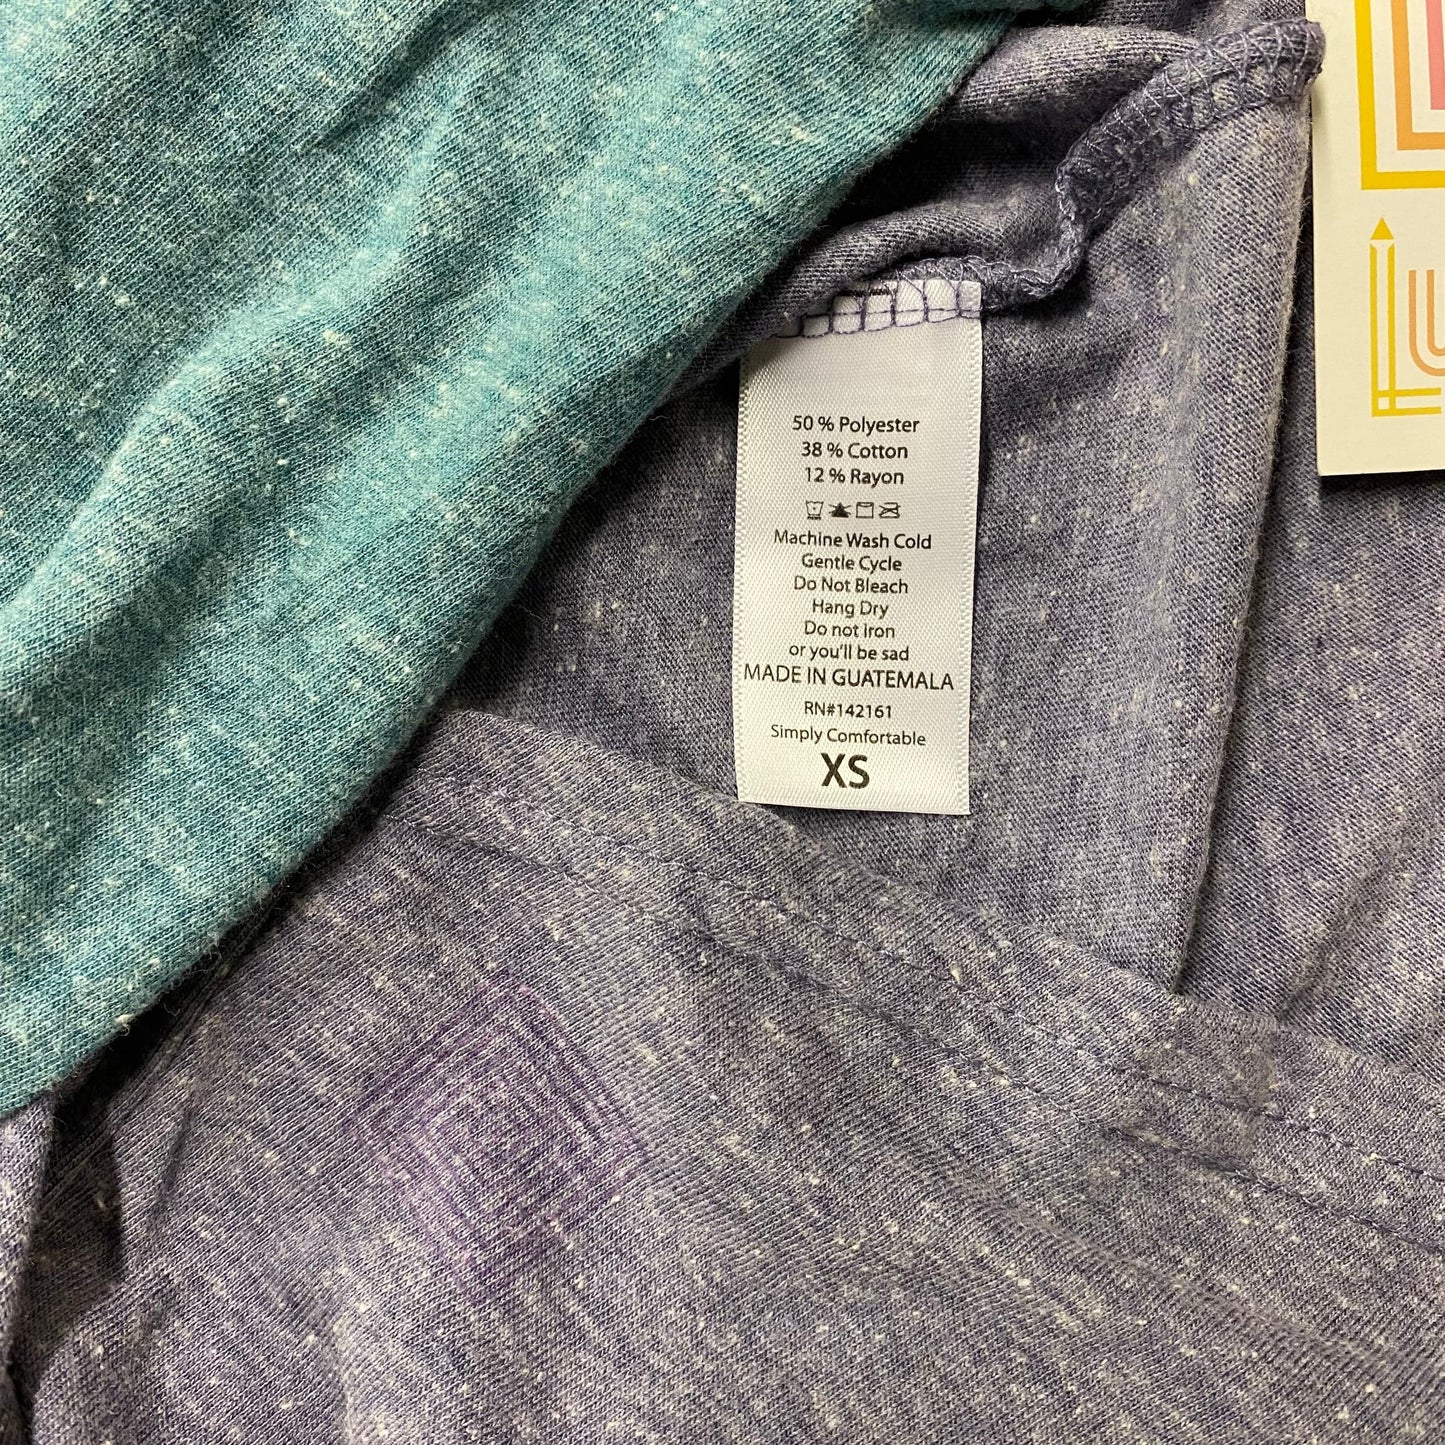 LuLaRoe Unisex Size XS Heather Green/Blue Mark Colorblock Henley Shirt L/s NWT